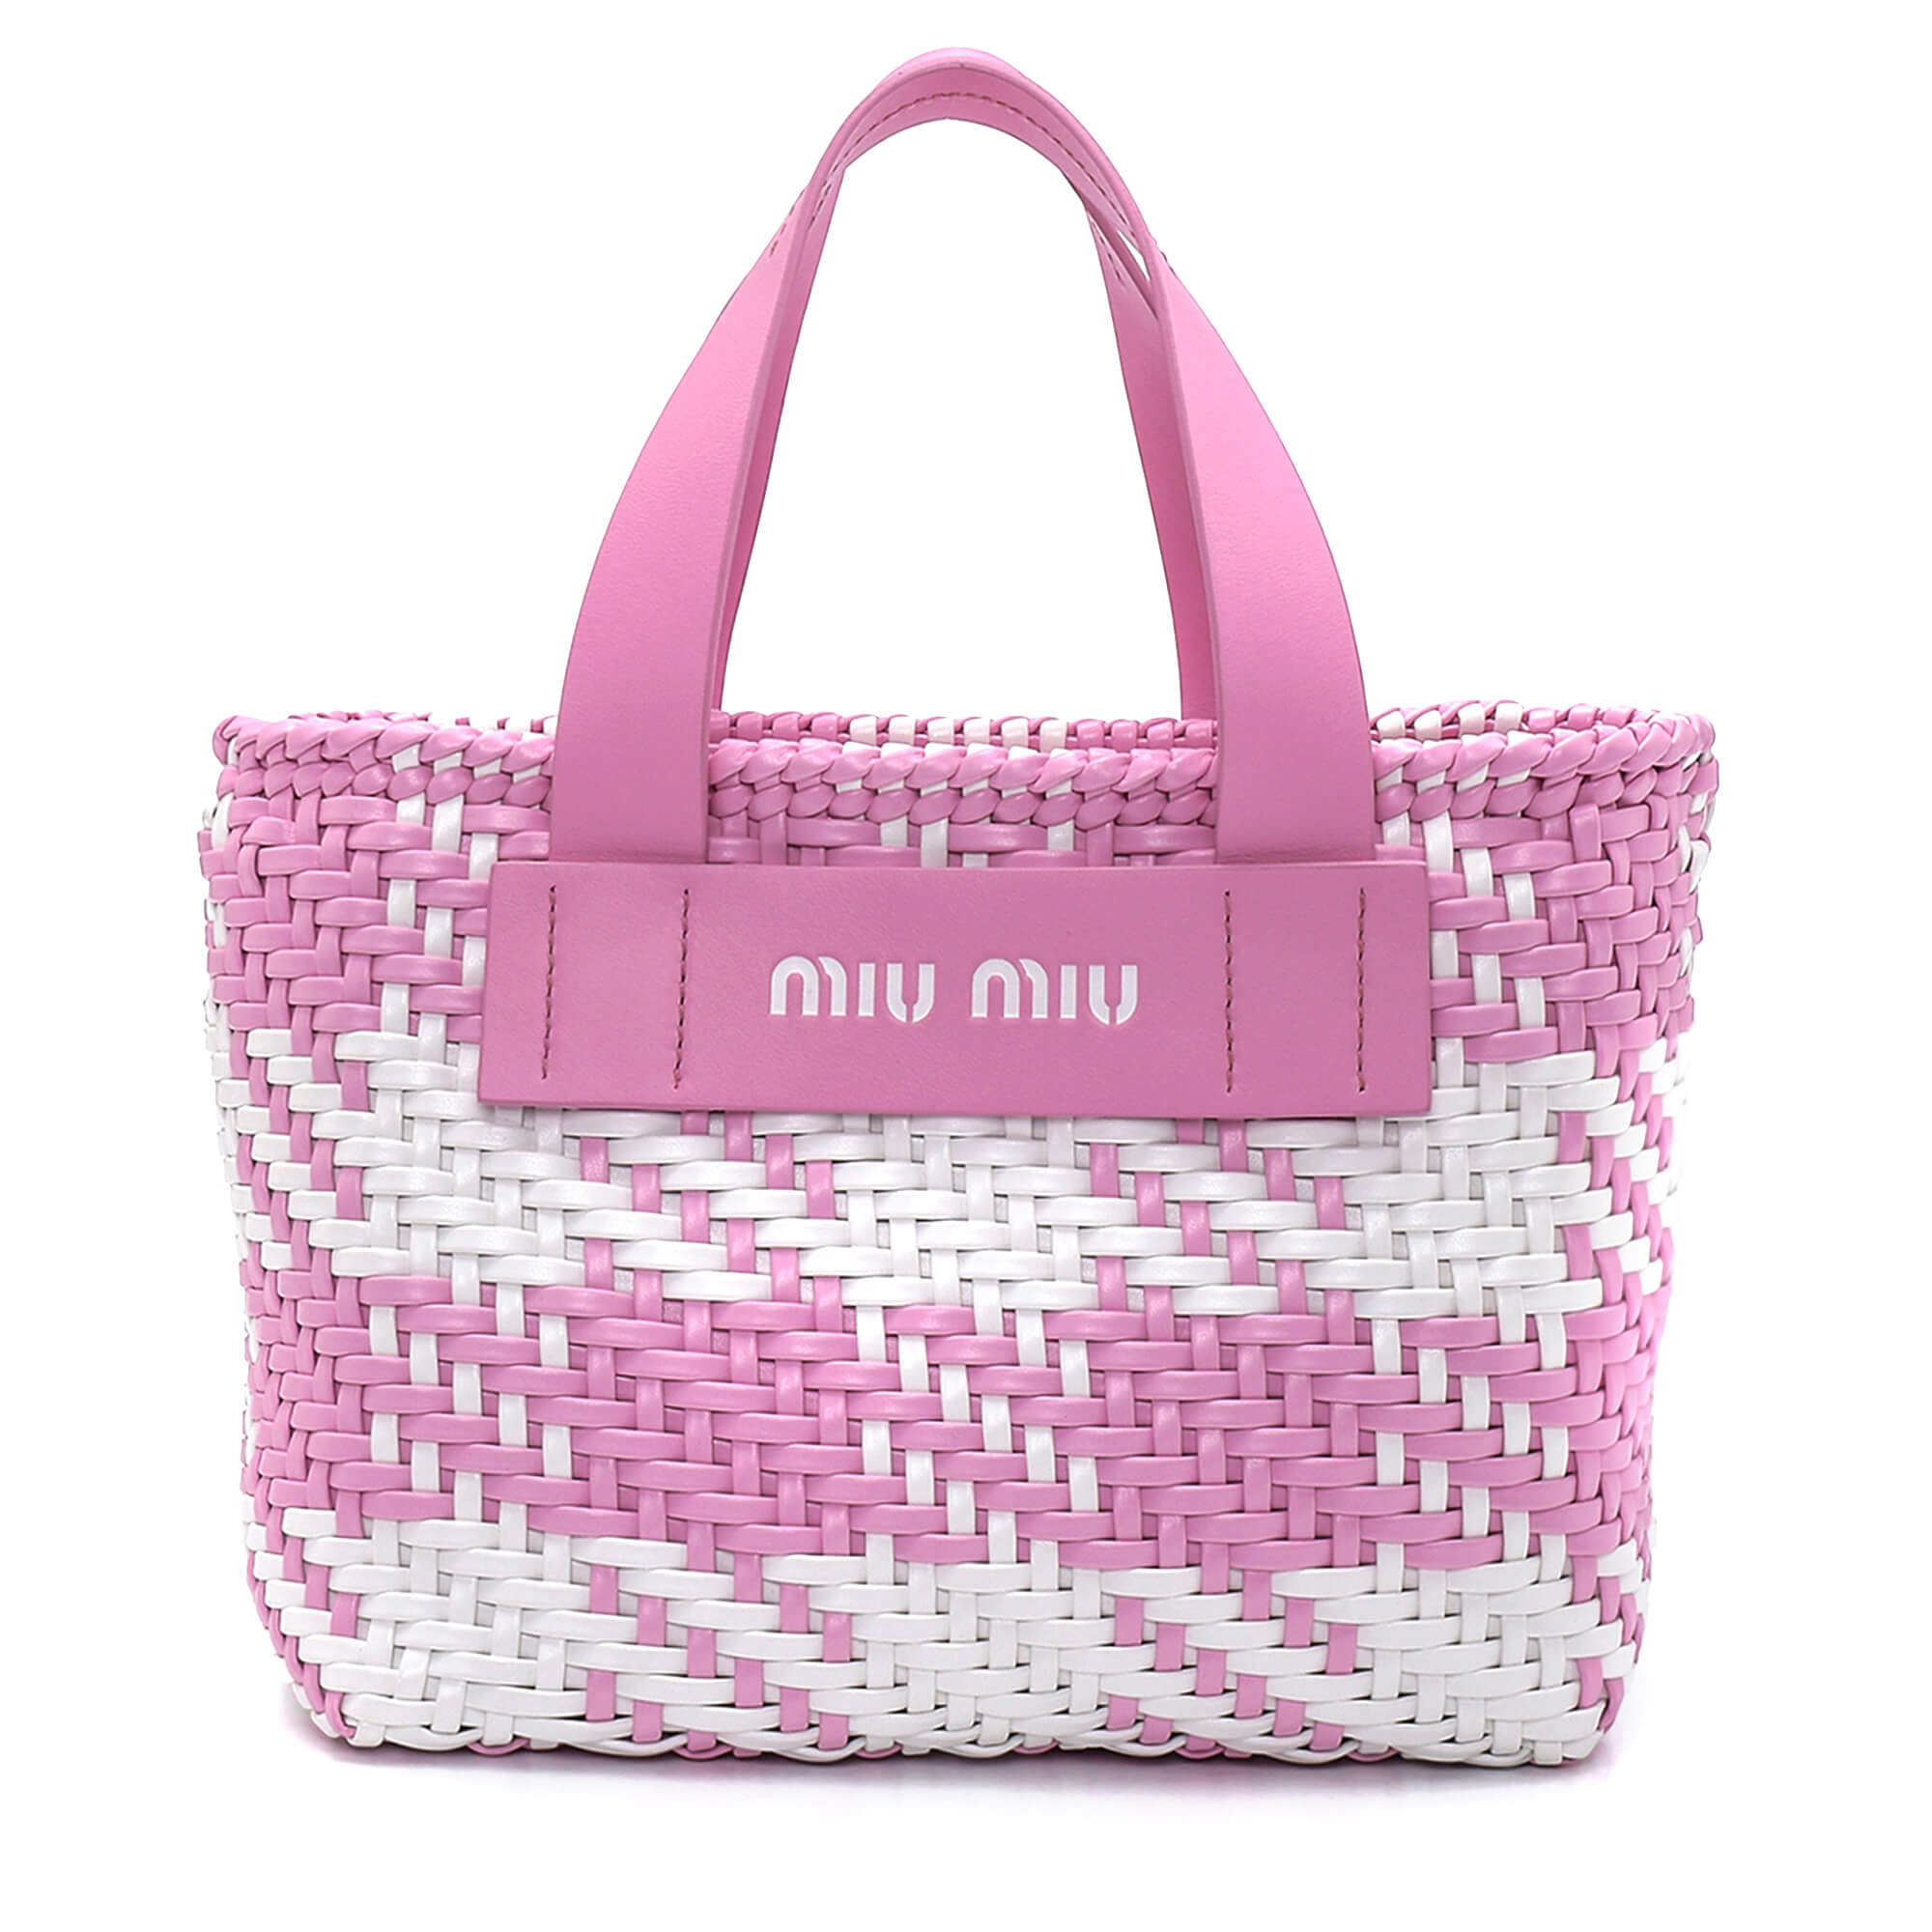 Miu Miu - Pink & White Leather Woven Gingham Tote Bag